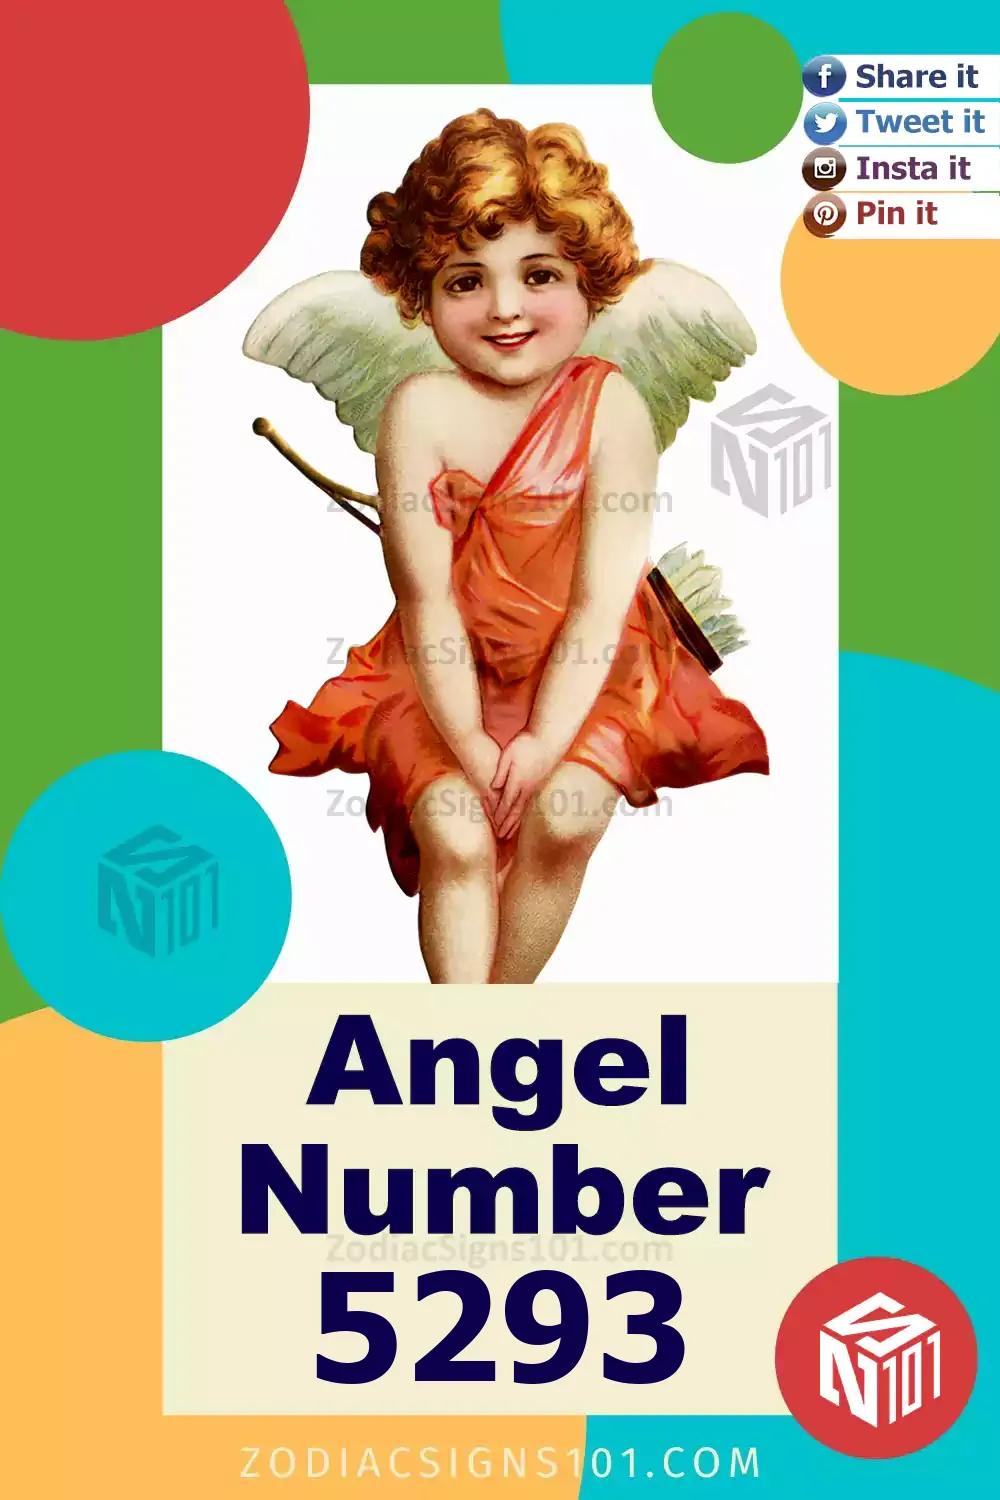 5293-Angel-Number-Meaning.jpg